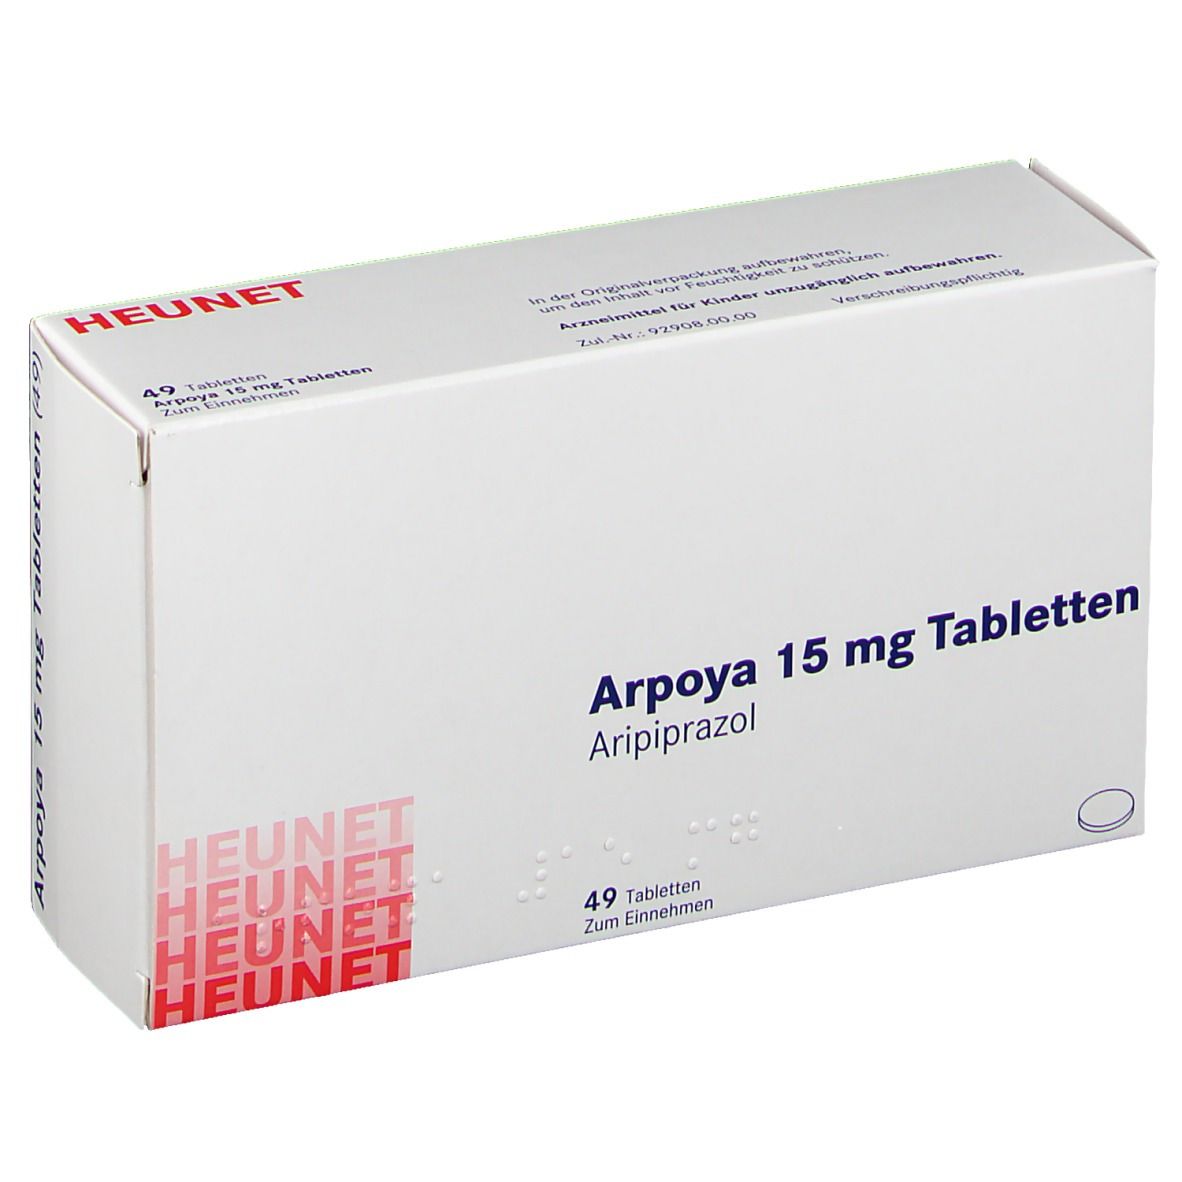 Arpoya 15 mg